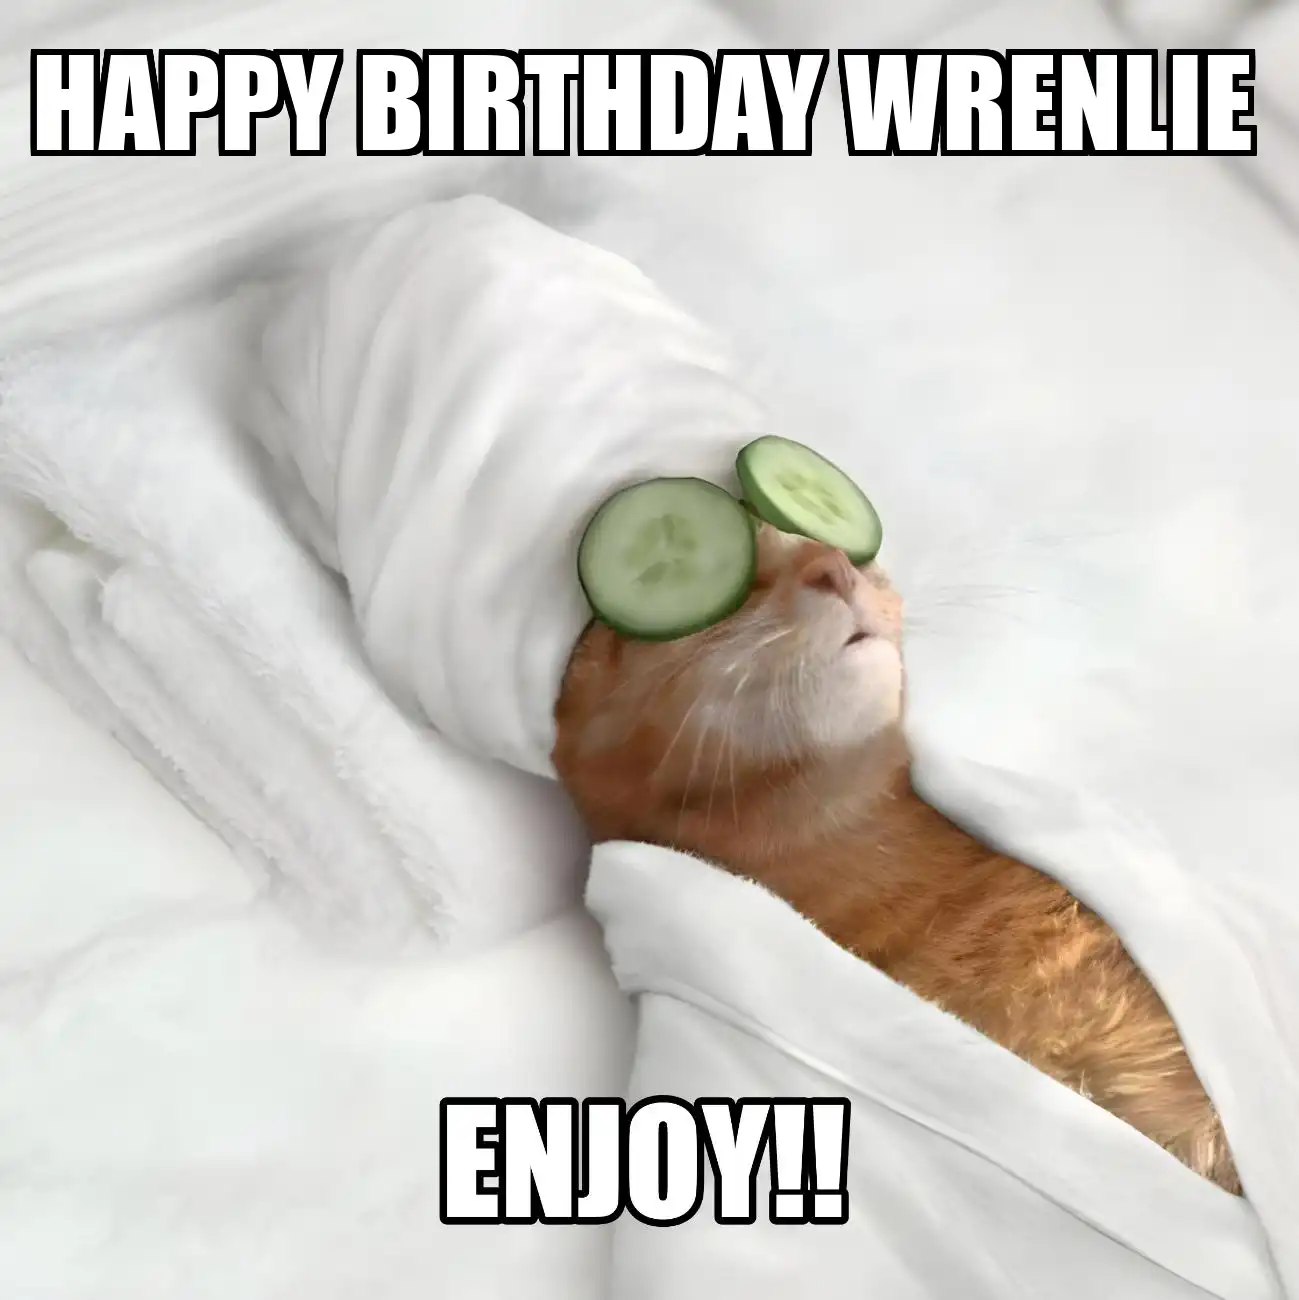 Happy Birthday Wrenlie Enjoy Cat Meme